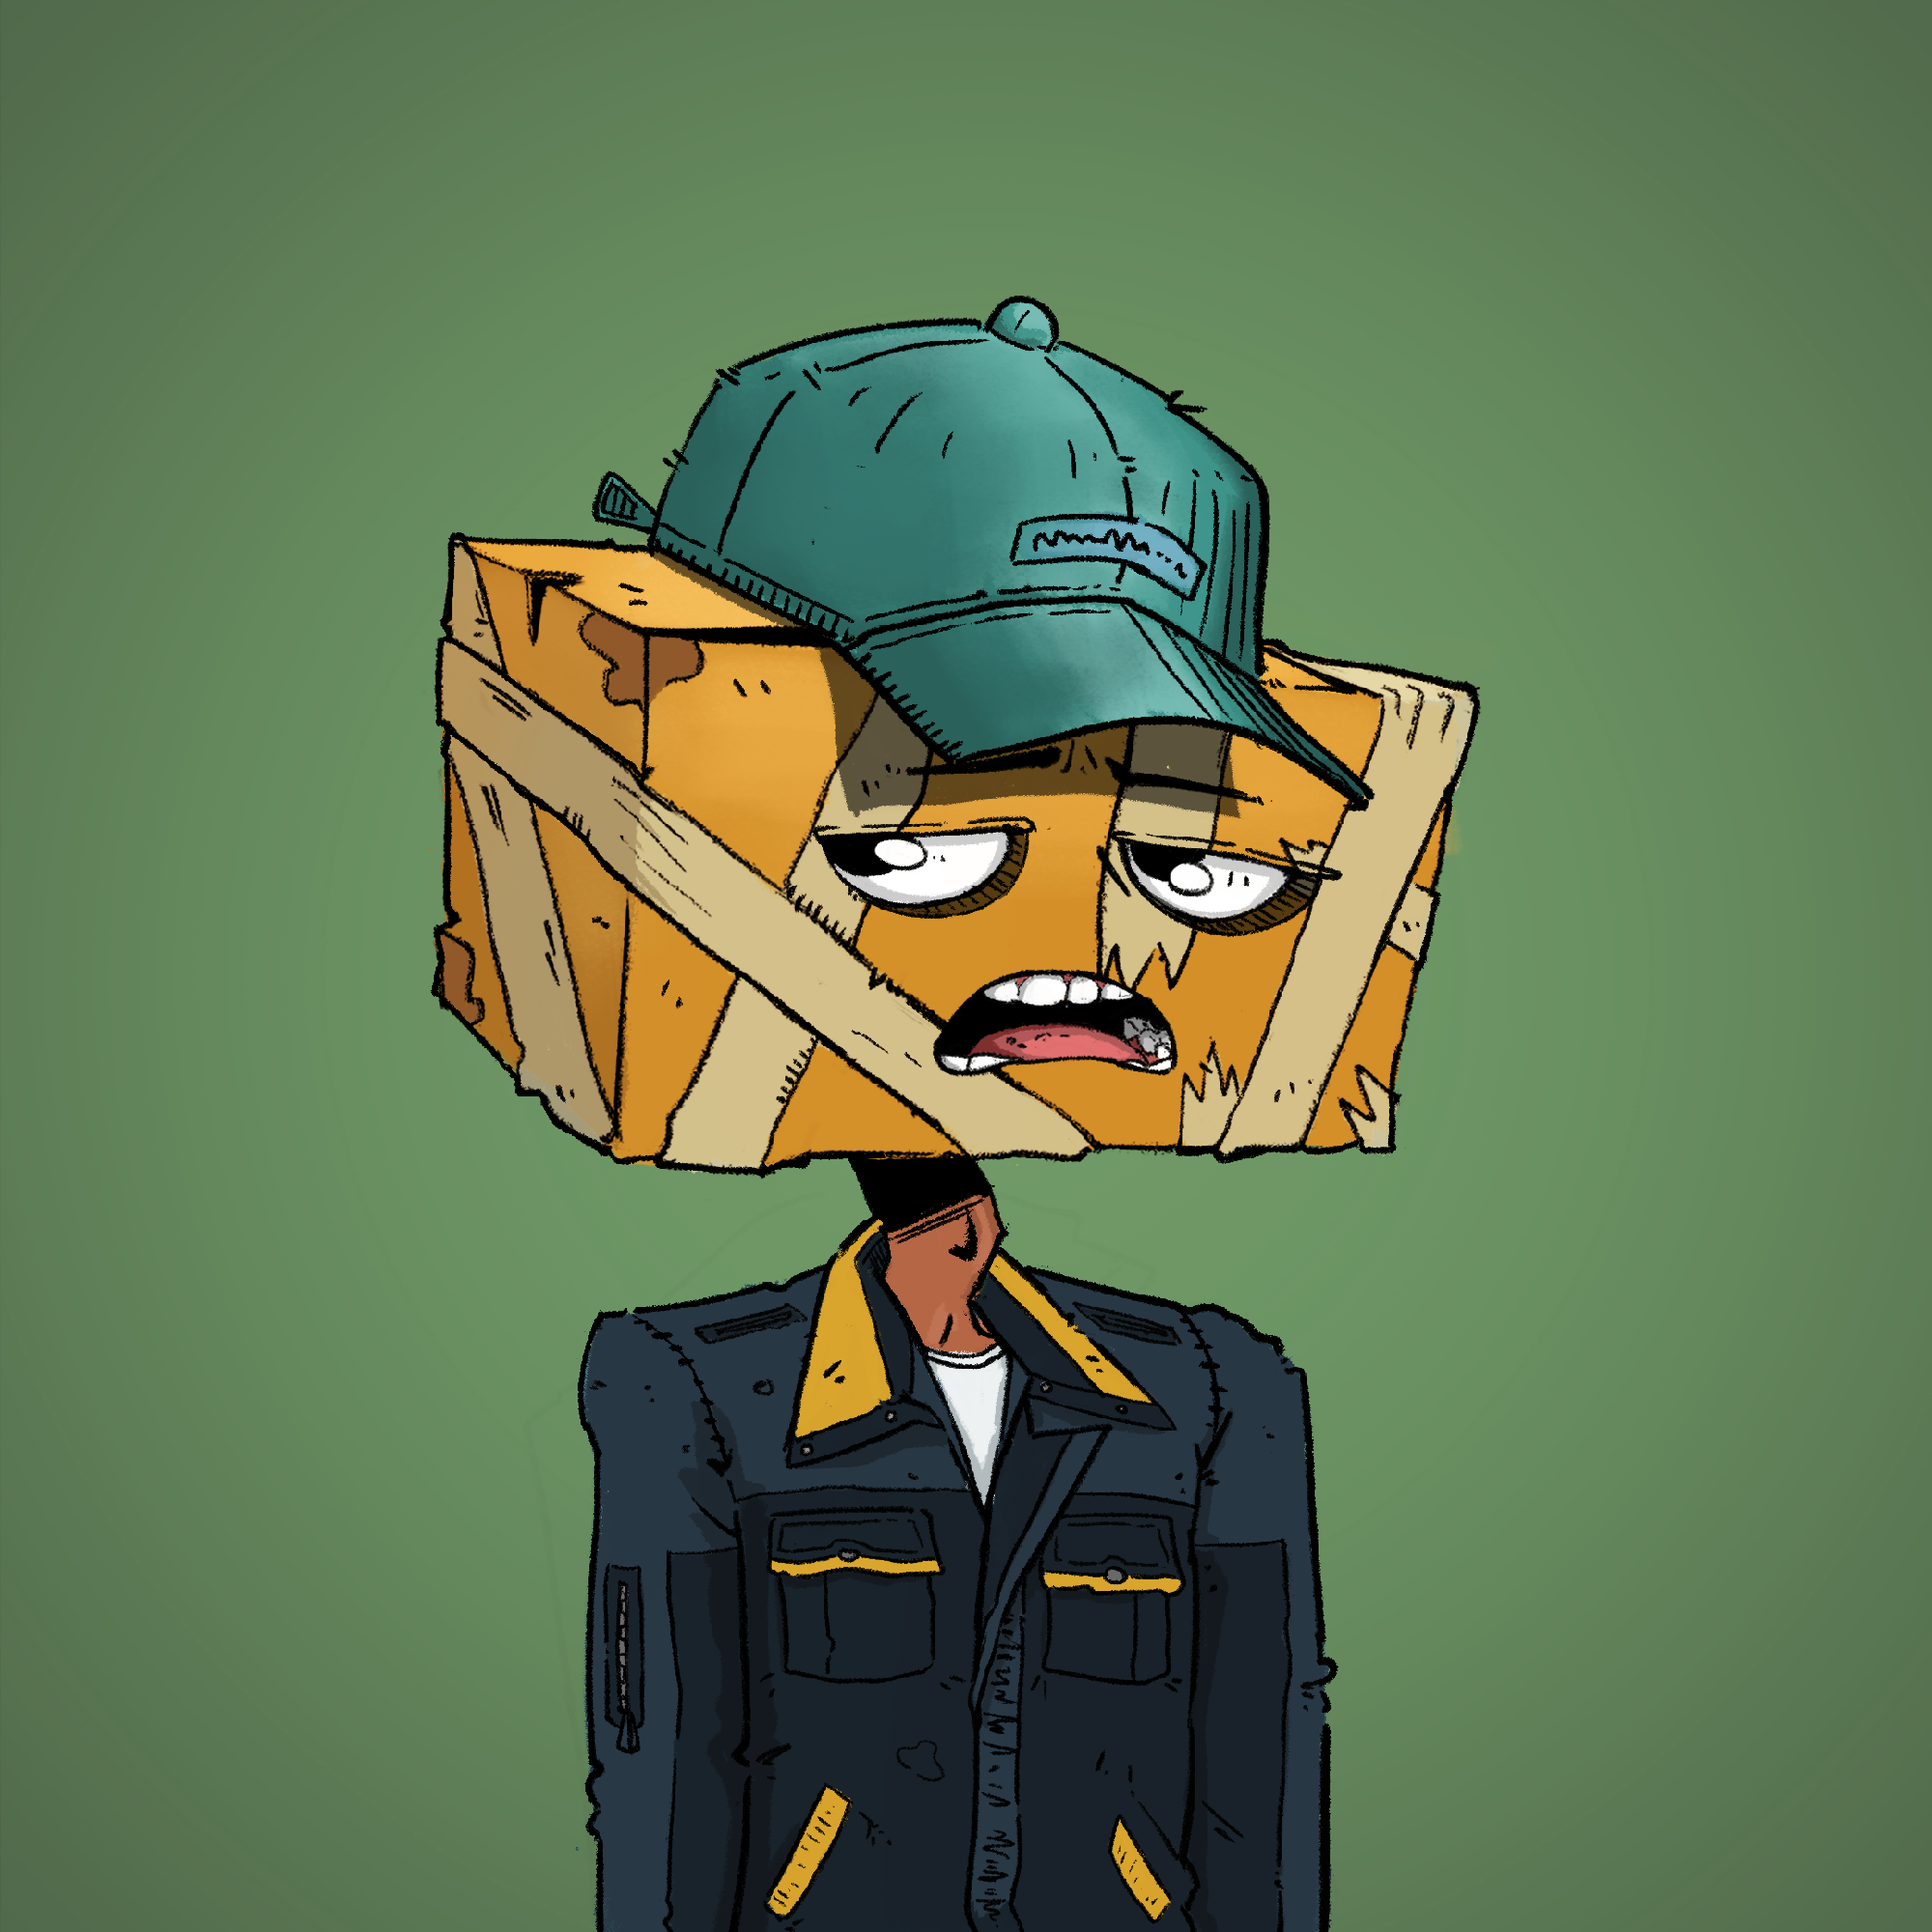 Cardboard Citizens #2289